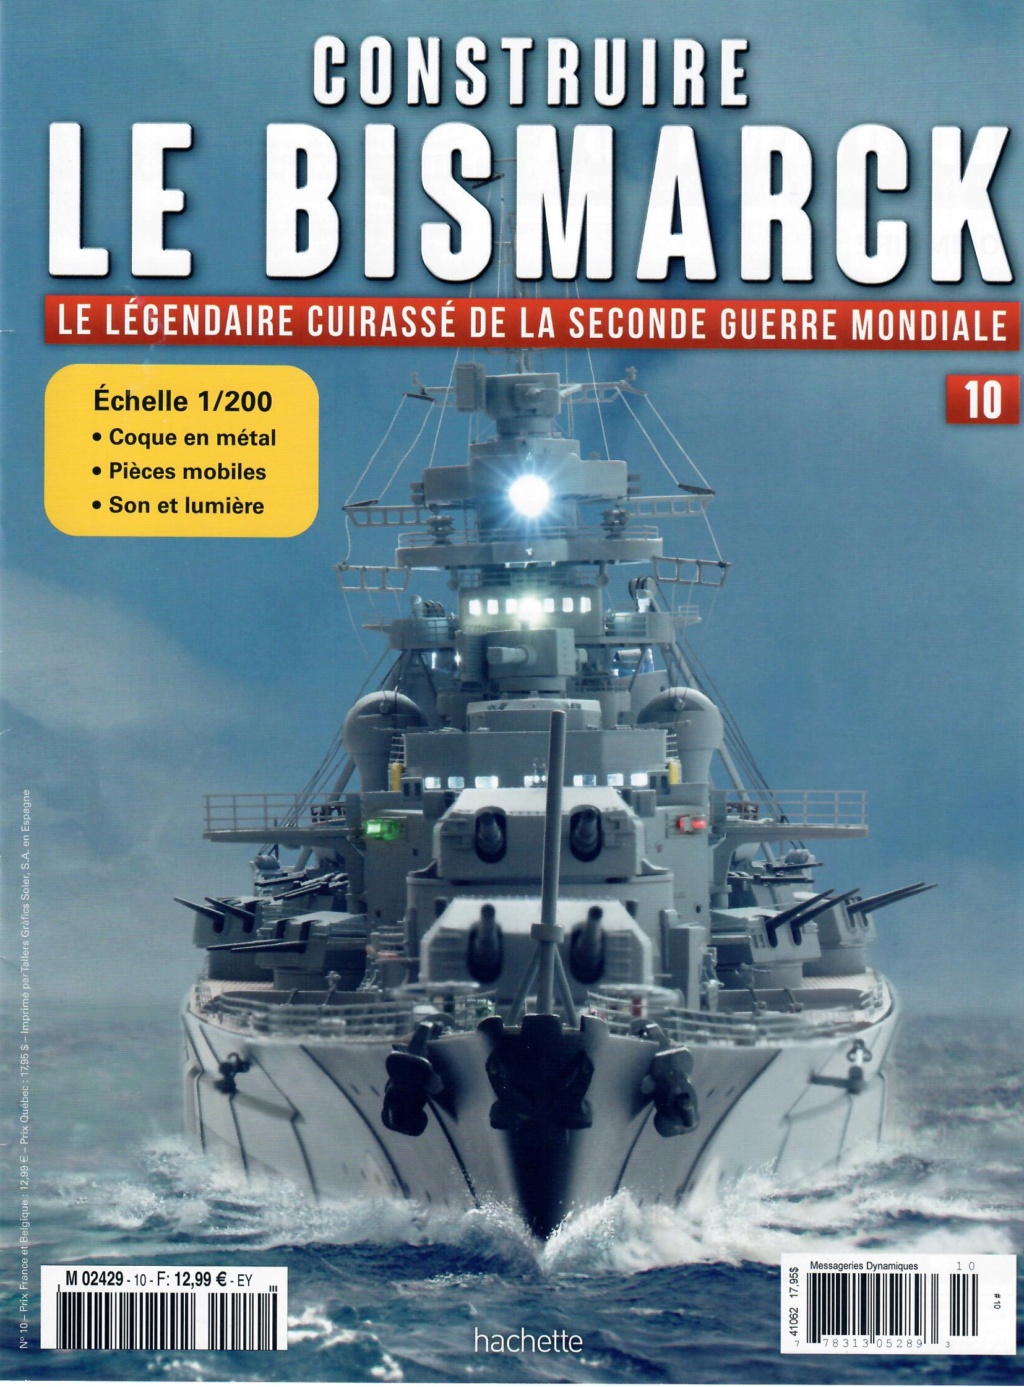 Bismarck - Hachette 1/200 par boks01 - Page 2 Bismar16